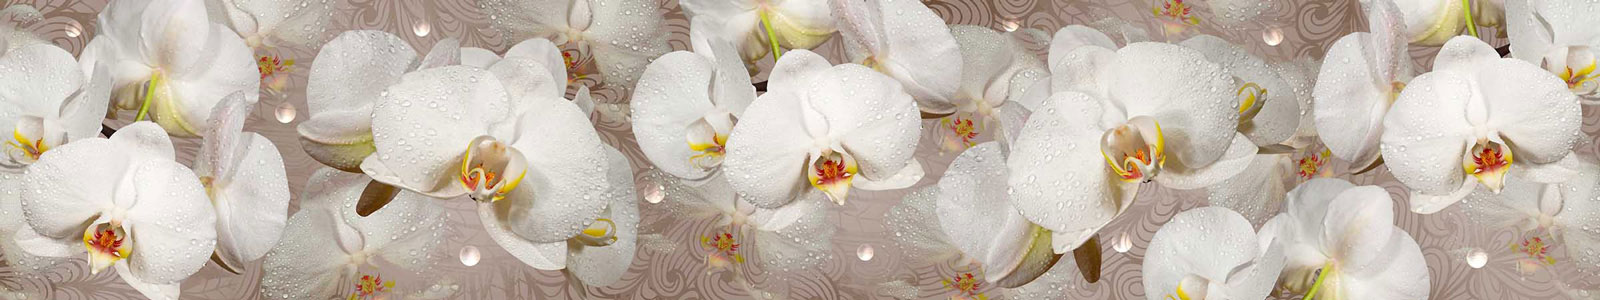 №3814 - Белые орхидеи с жемчужинами на коричневом фоне